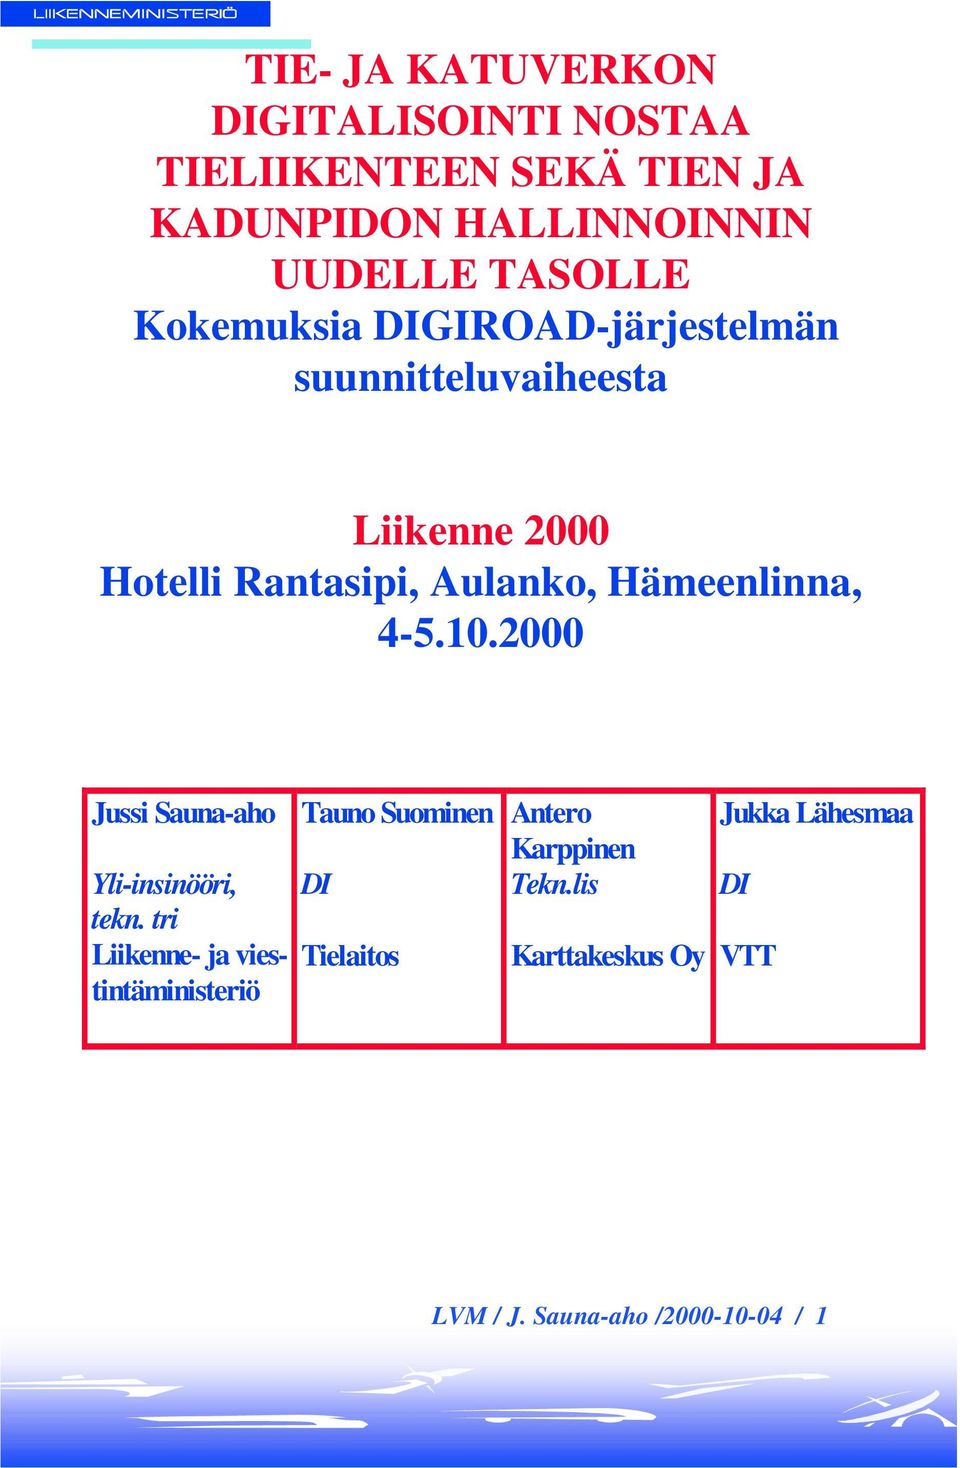 Hämeenlinna, 4-5.10.2000 Jussi Sauna-aho Yli-insinööri, tekn.